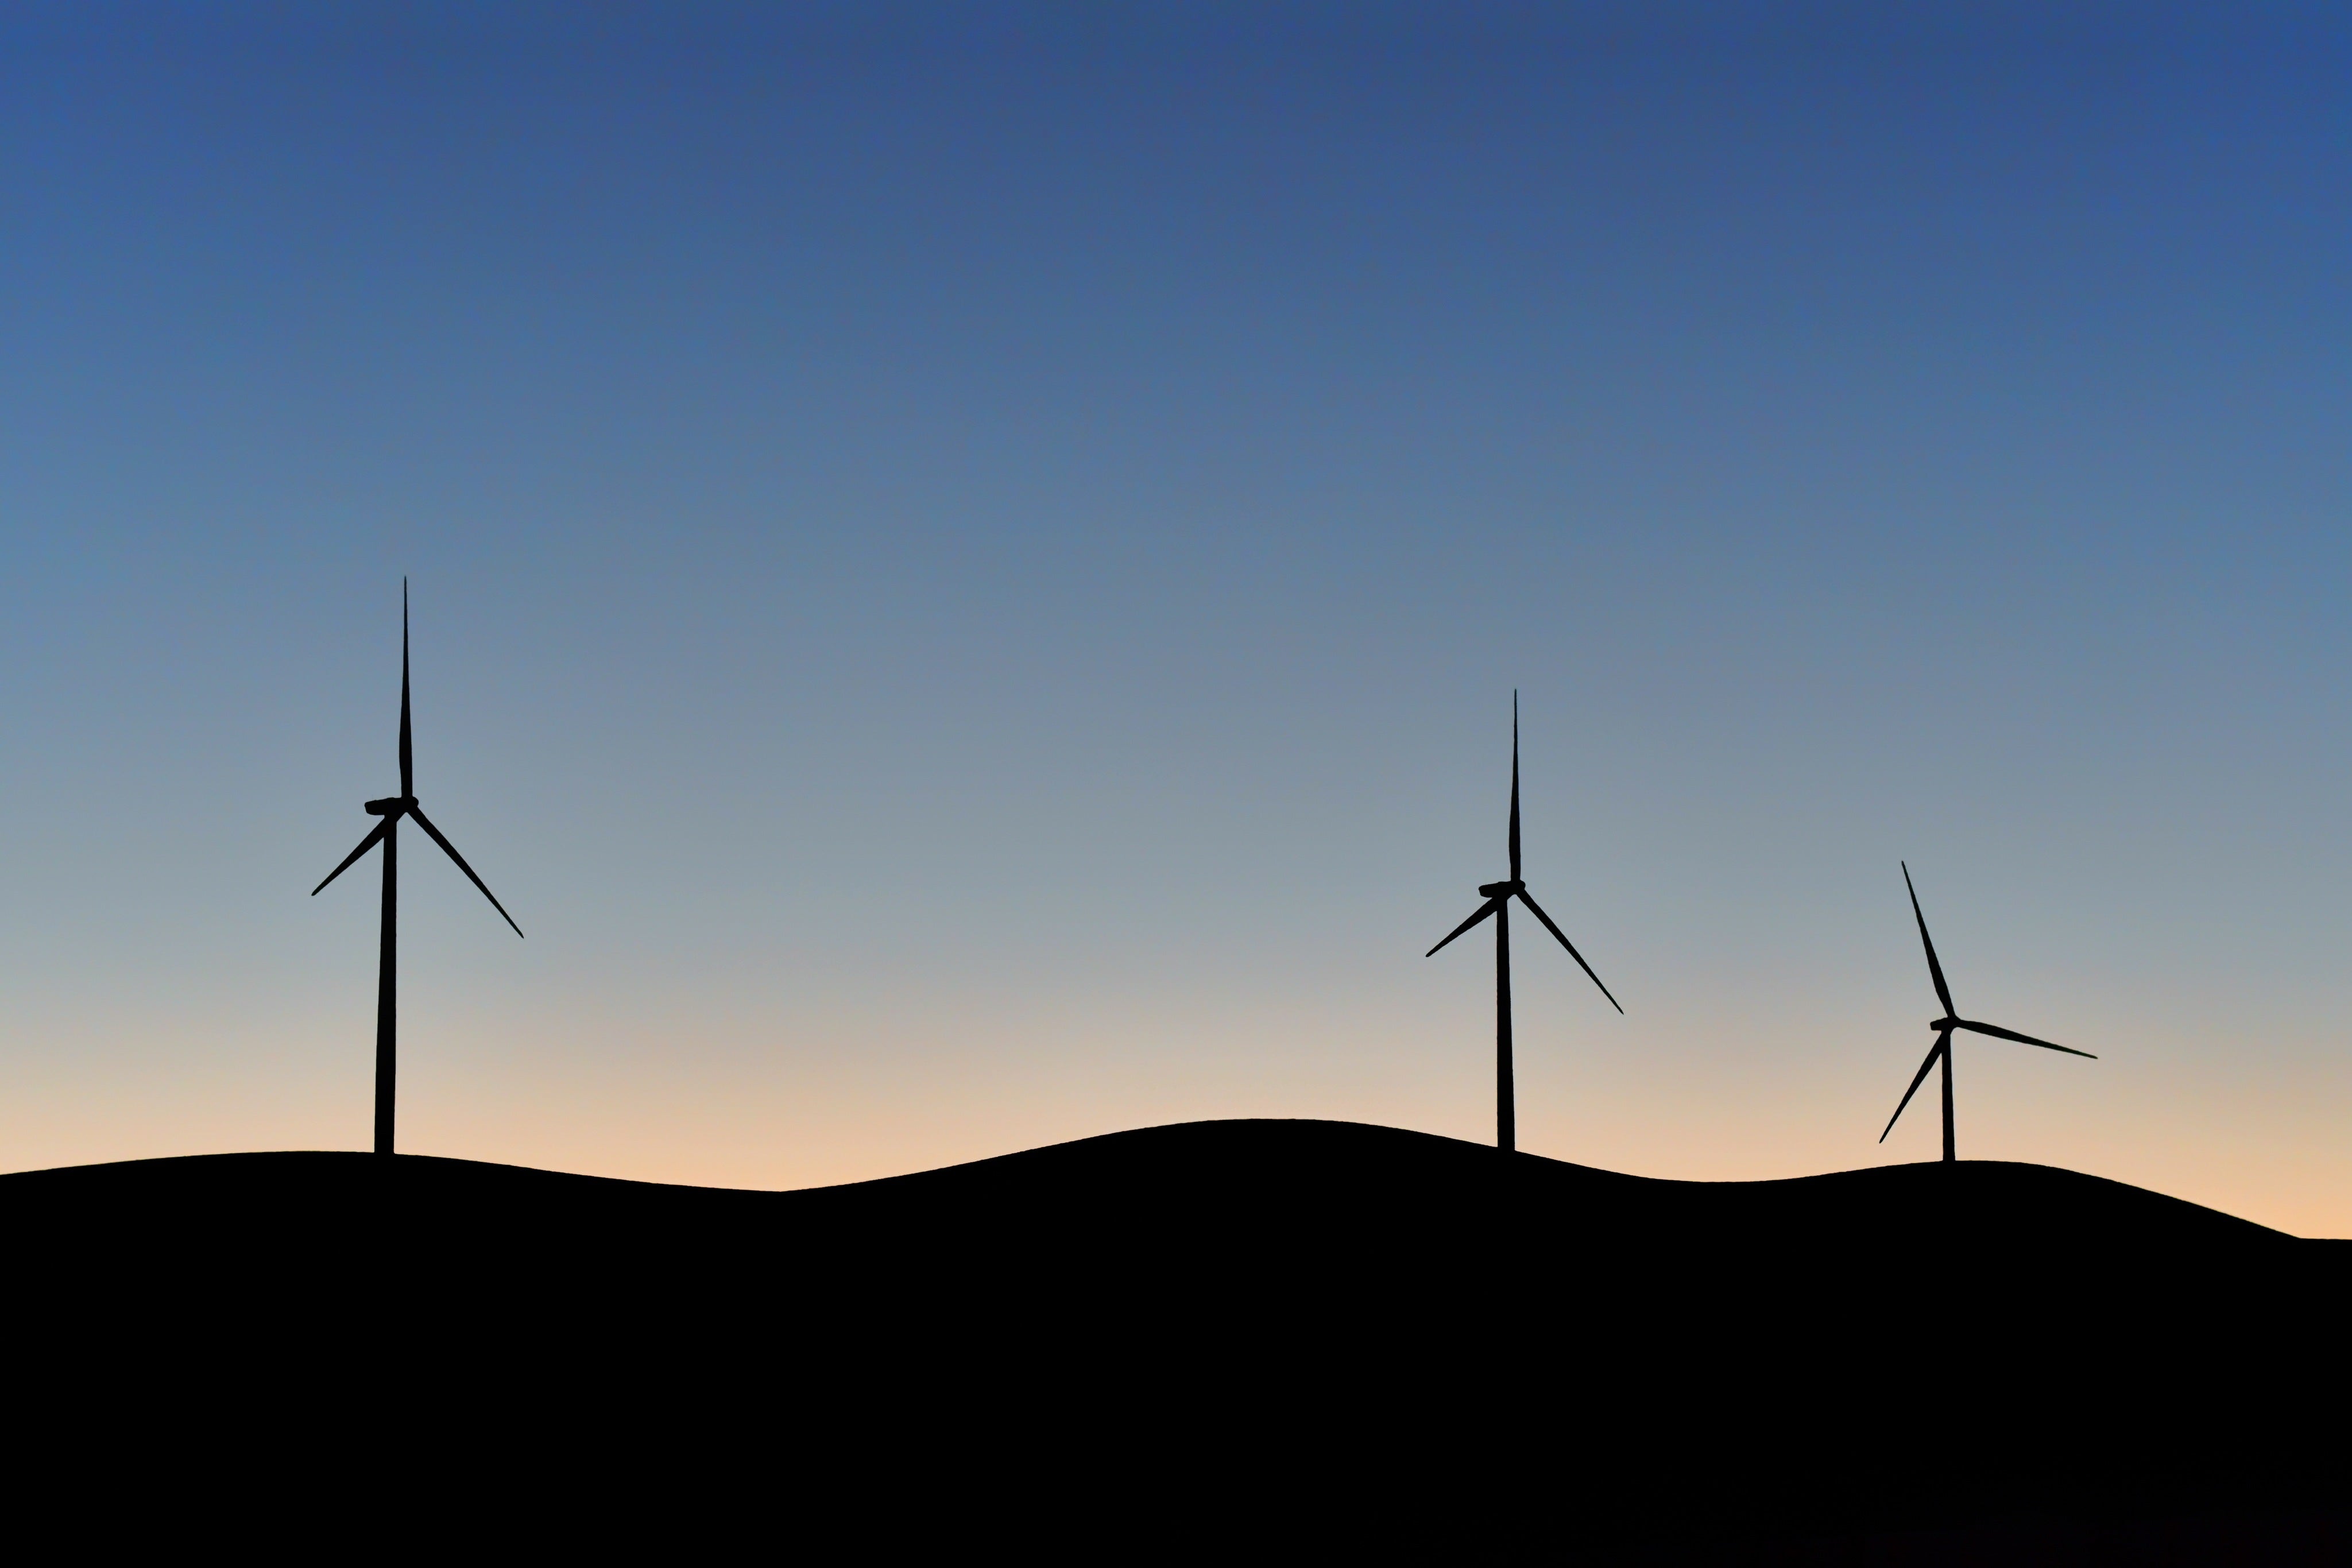 Silhouettes of wind turbines